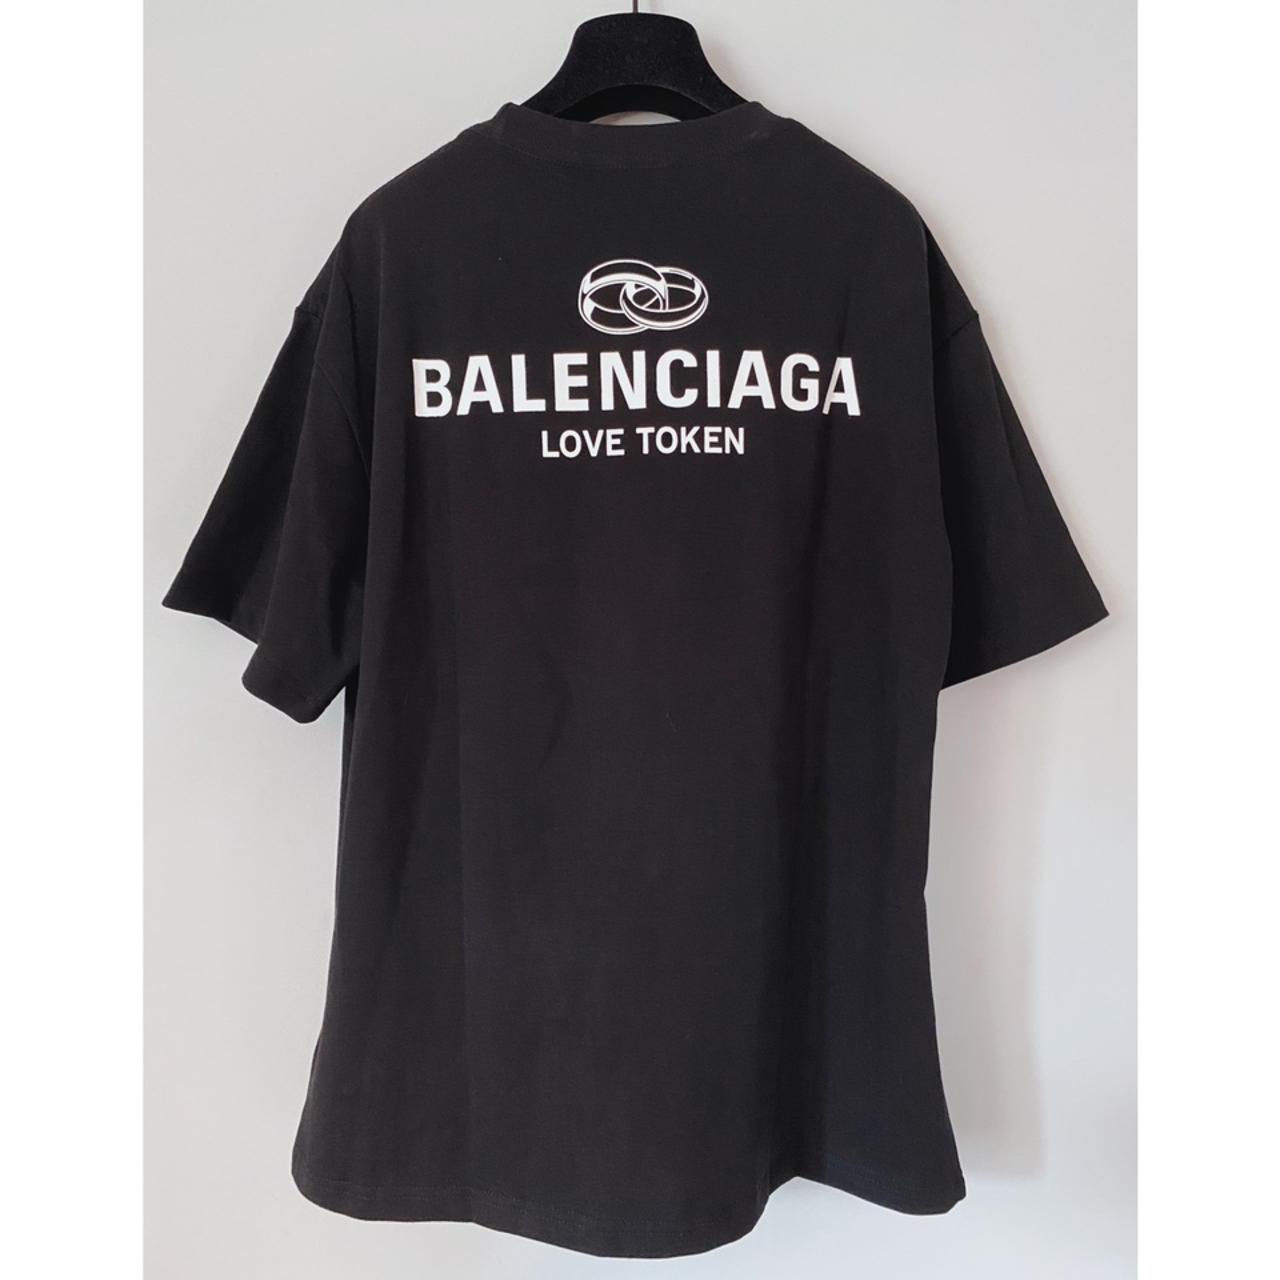 Balenciaga love token T-shirt New design!!! Size... - Depop